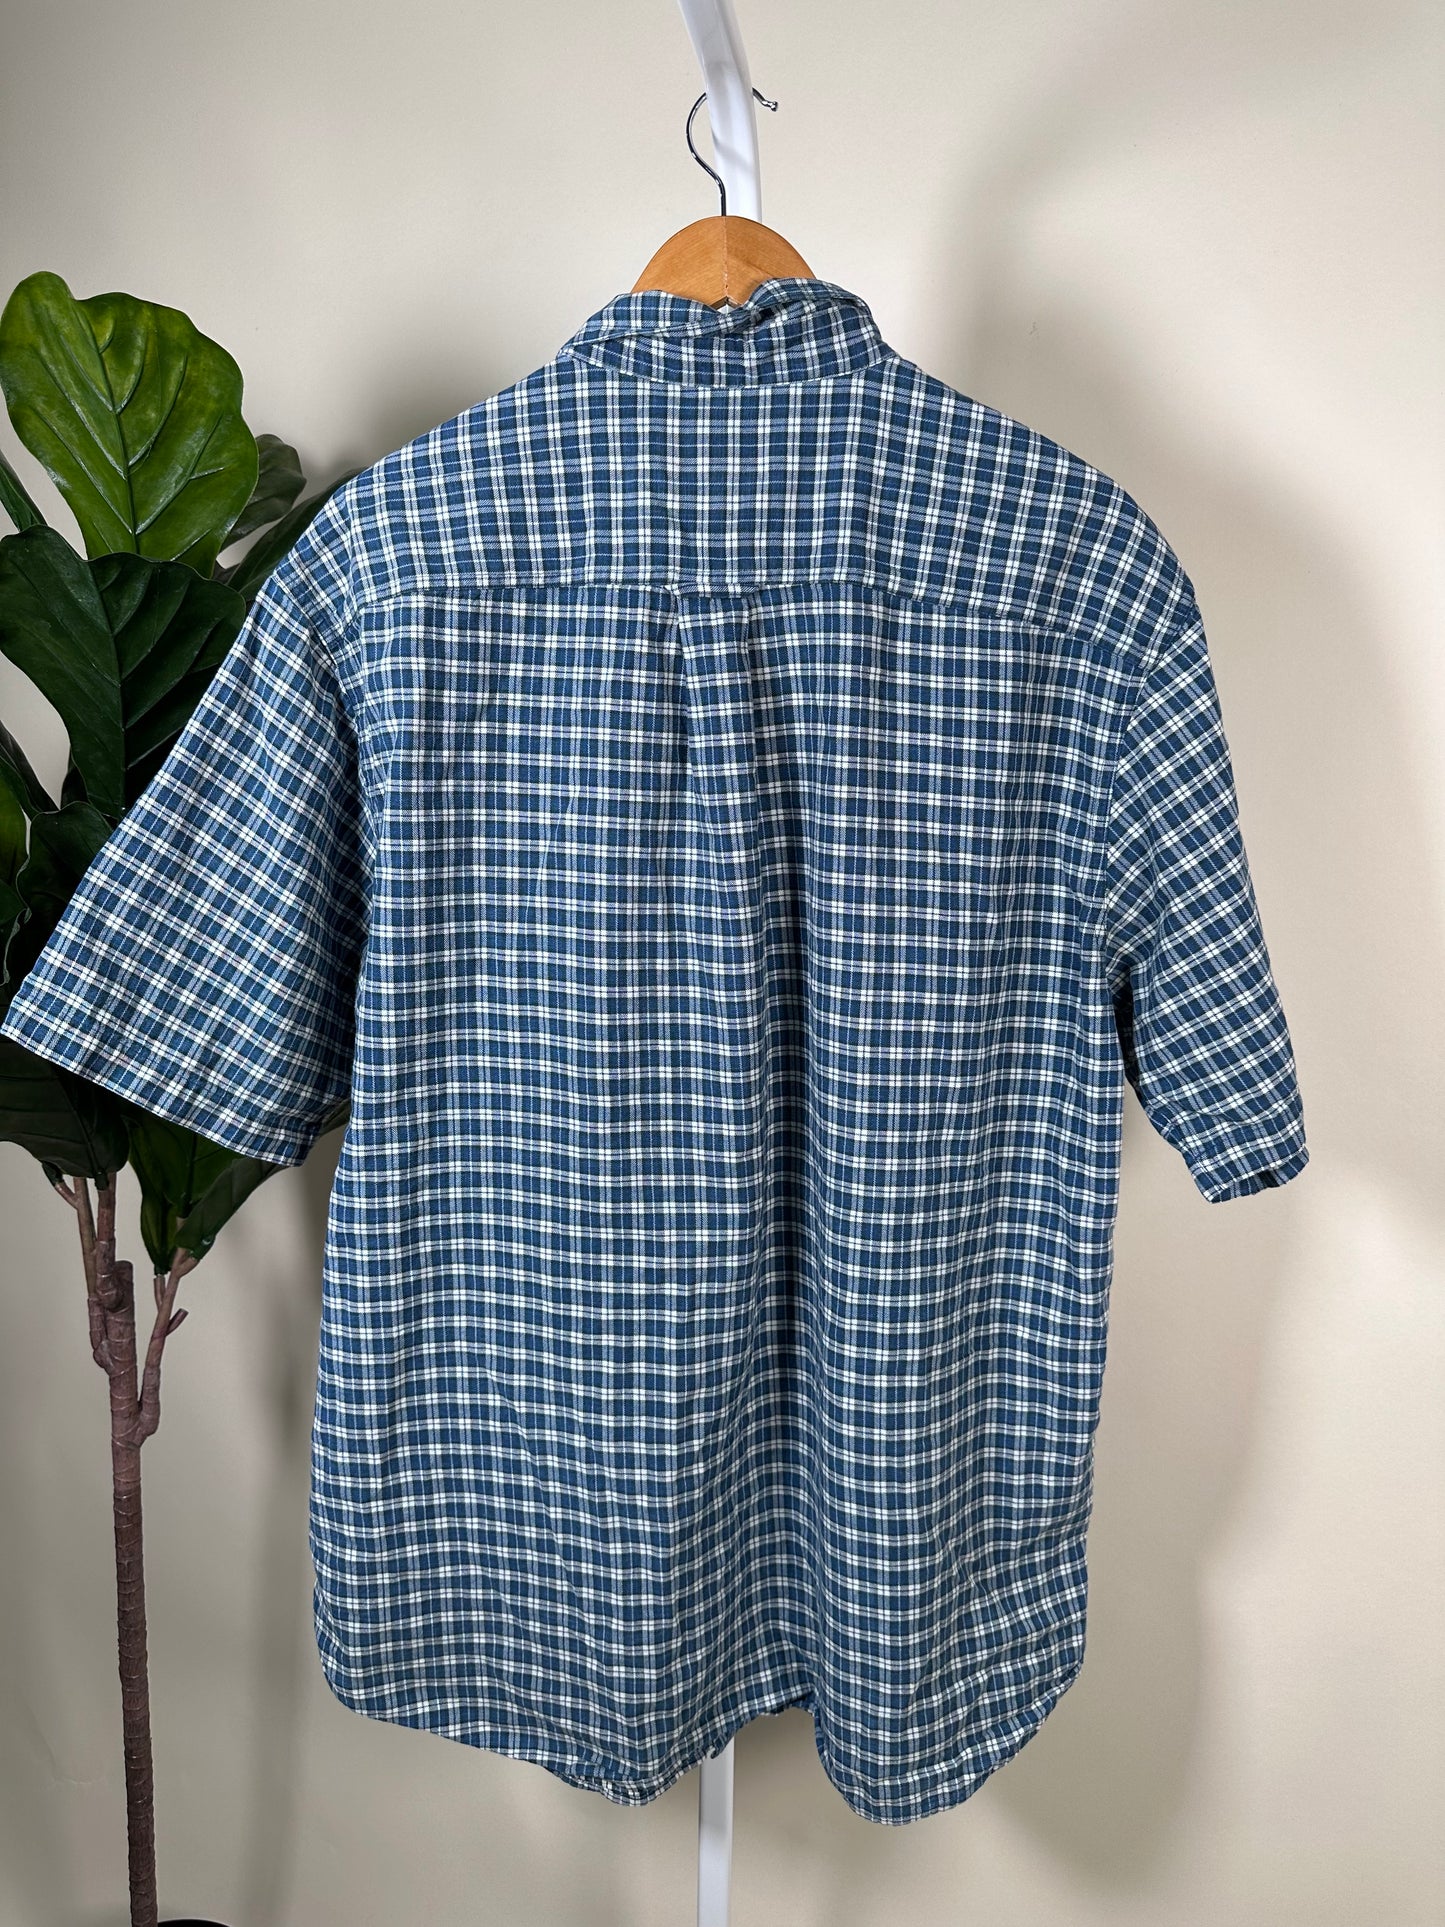 John Ashford Shirt (XL)